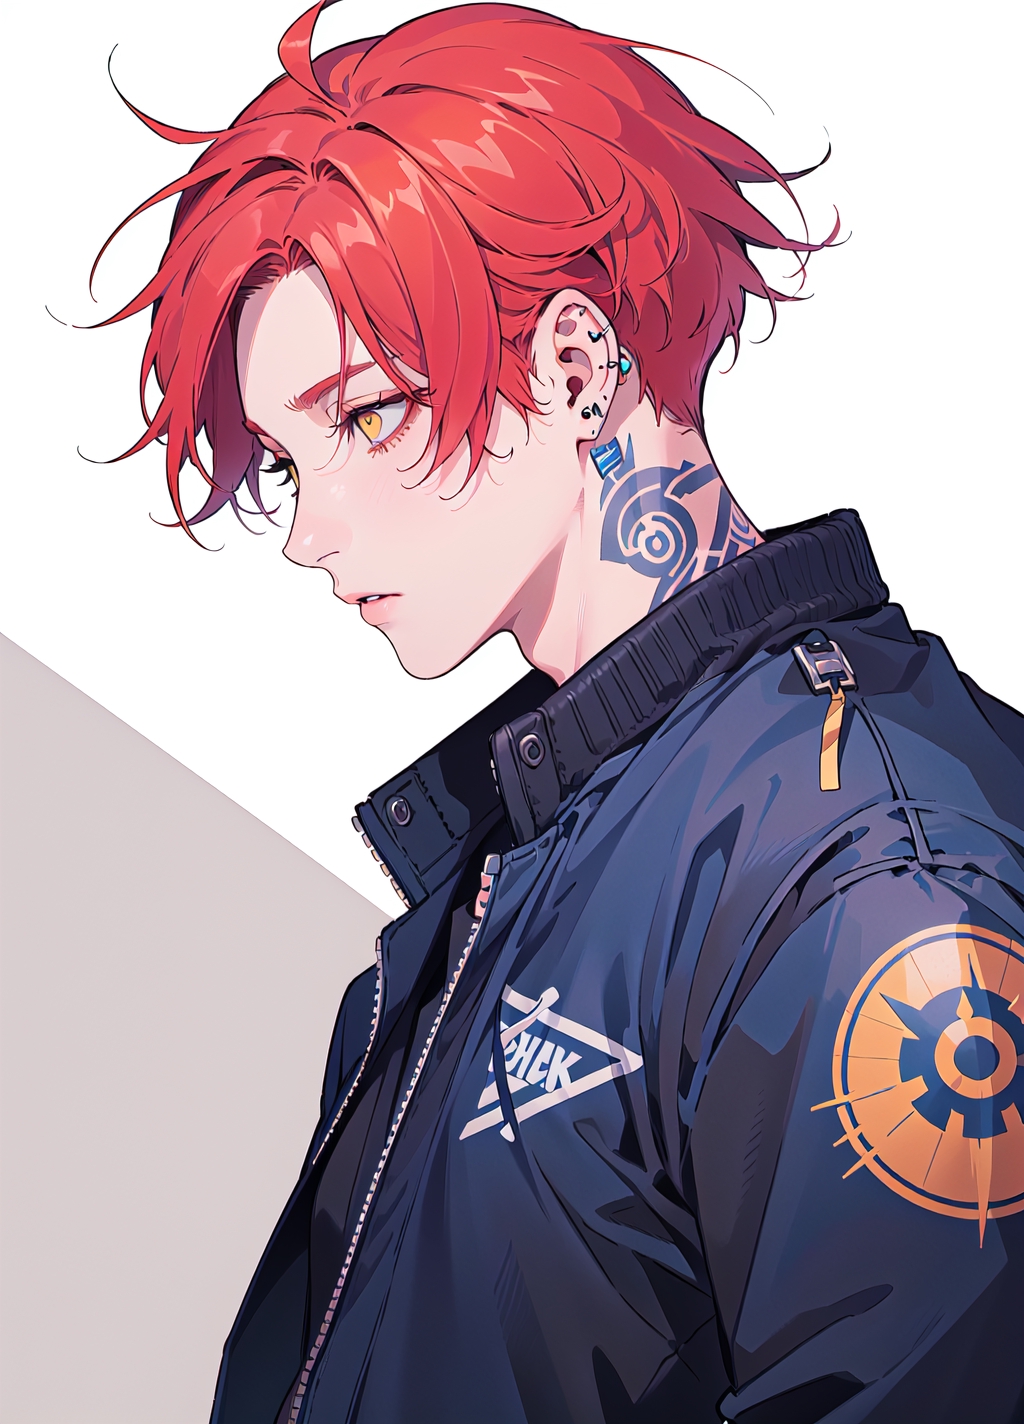 Anime boy with dark blue eyes and white spiky hair